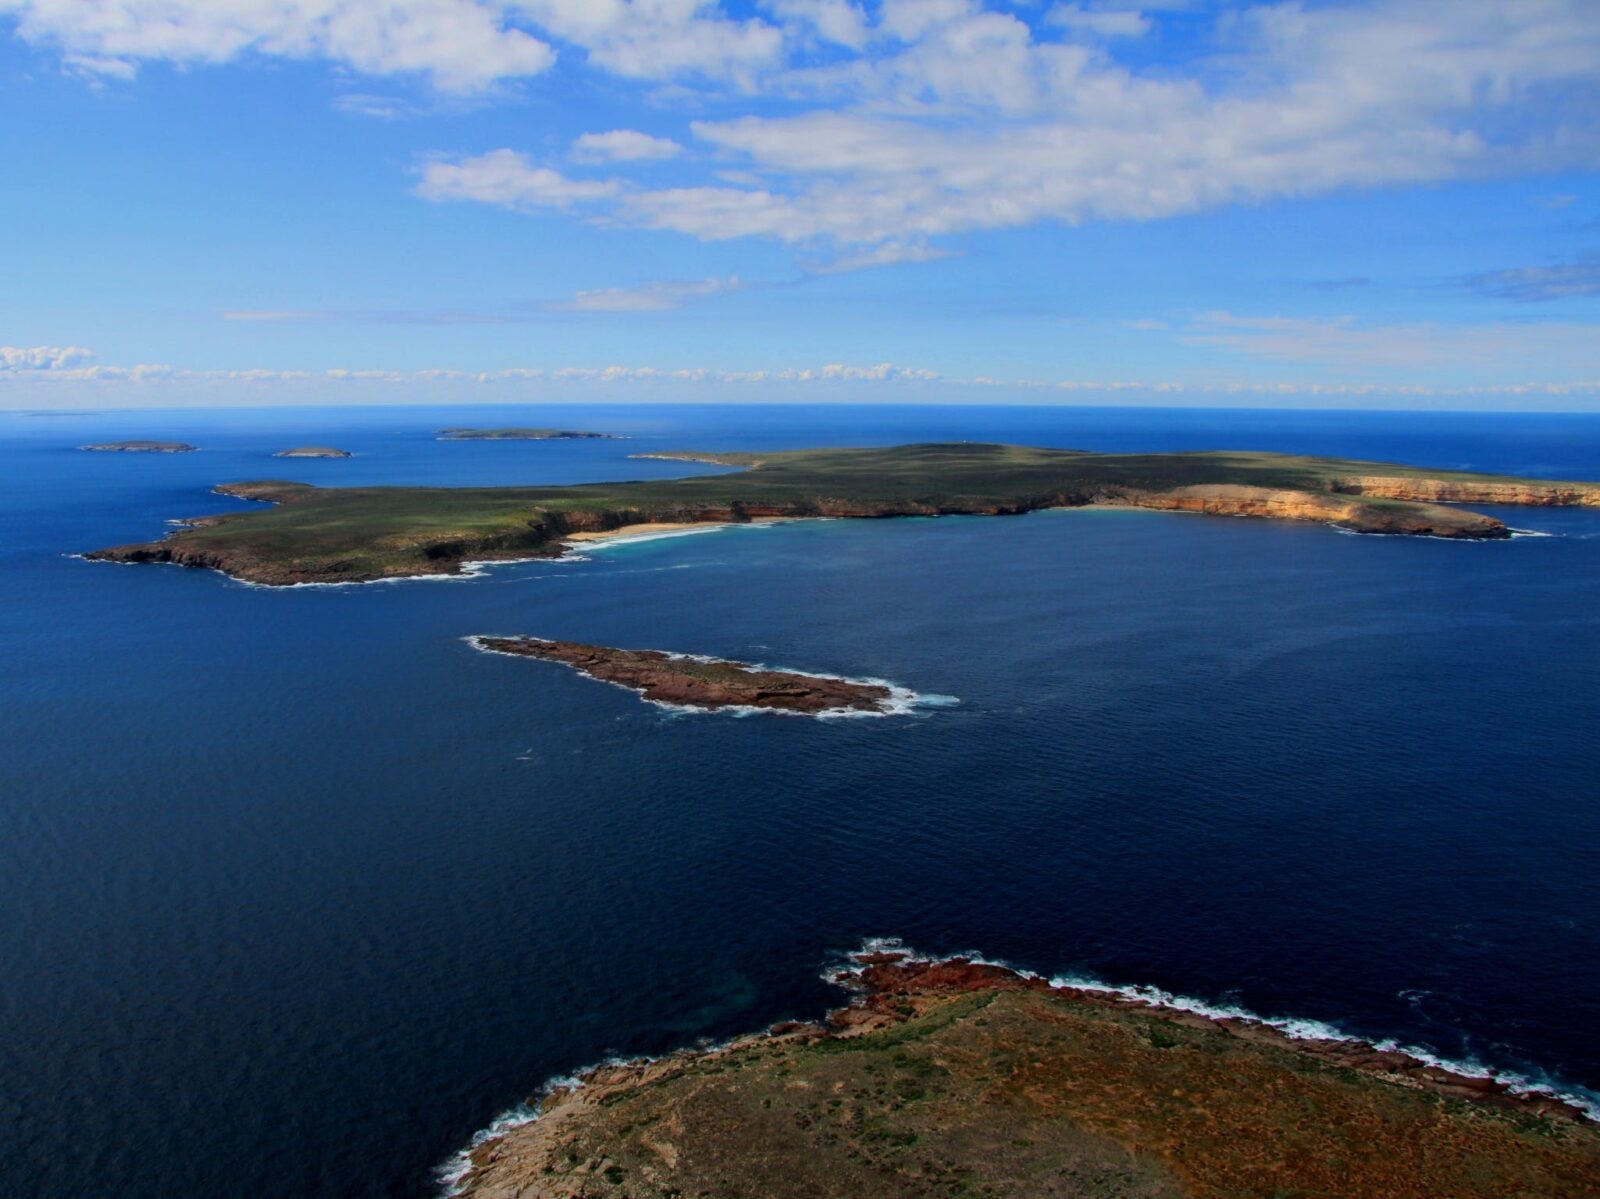 Nuyts Archipelago Conservation Park